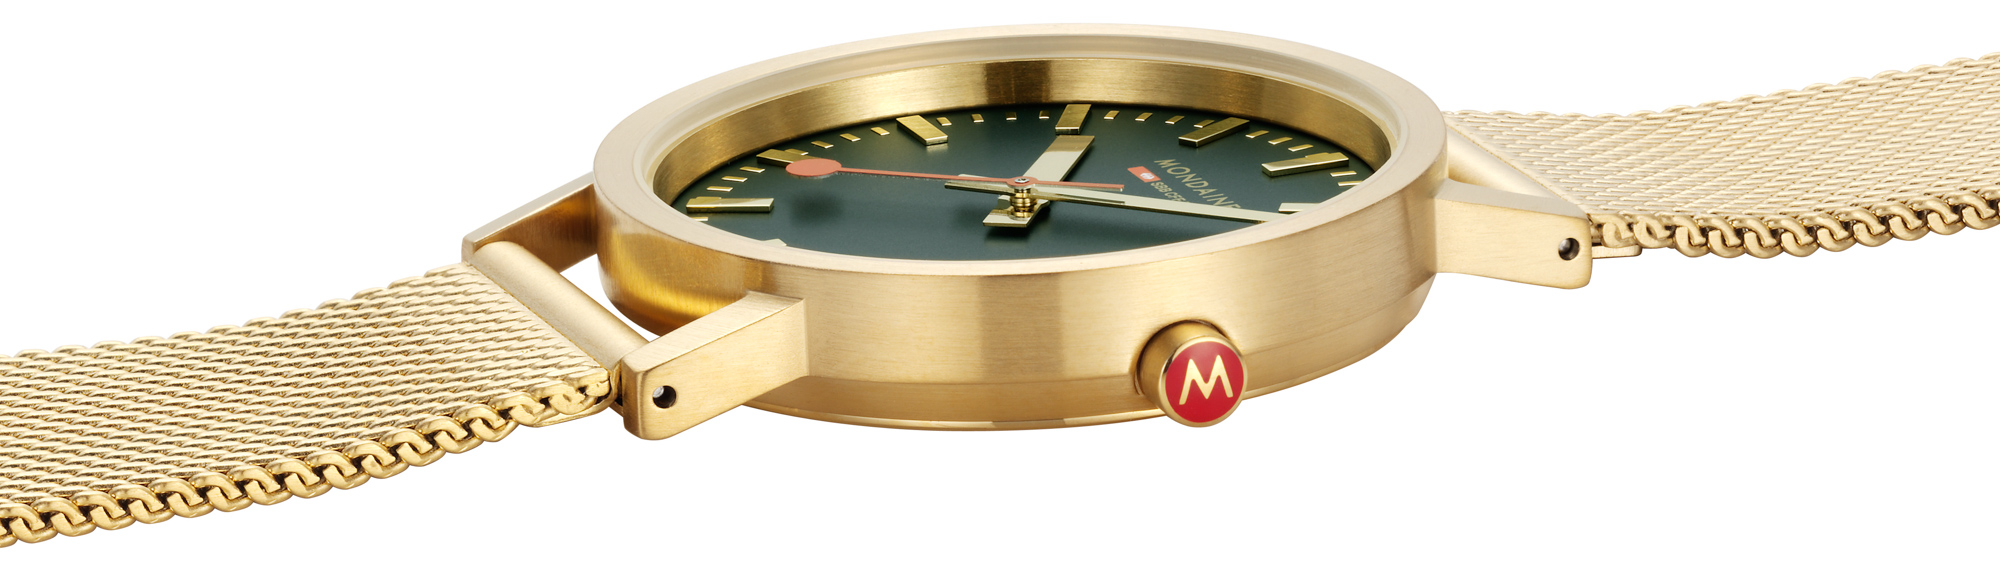 Mondaine расширяет коллекцию часов SBB Classic на осень